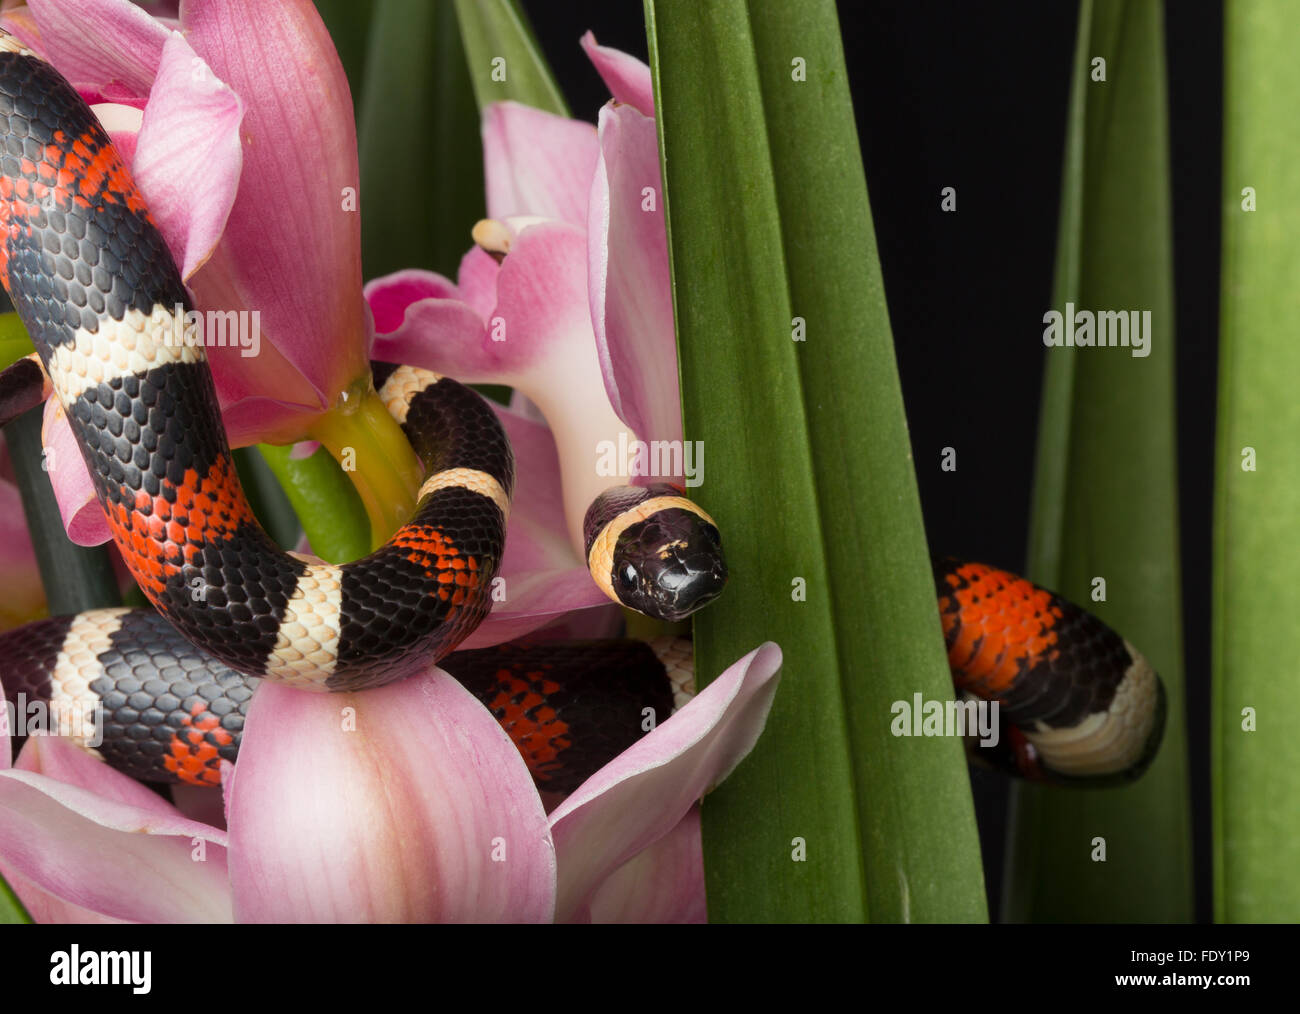 Banded Snake among Flowers Stock Photo